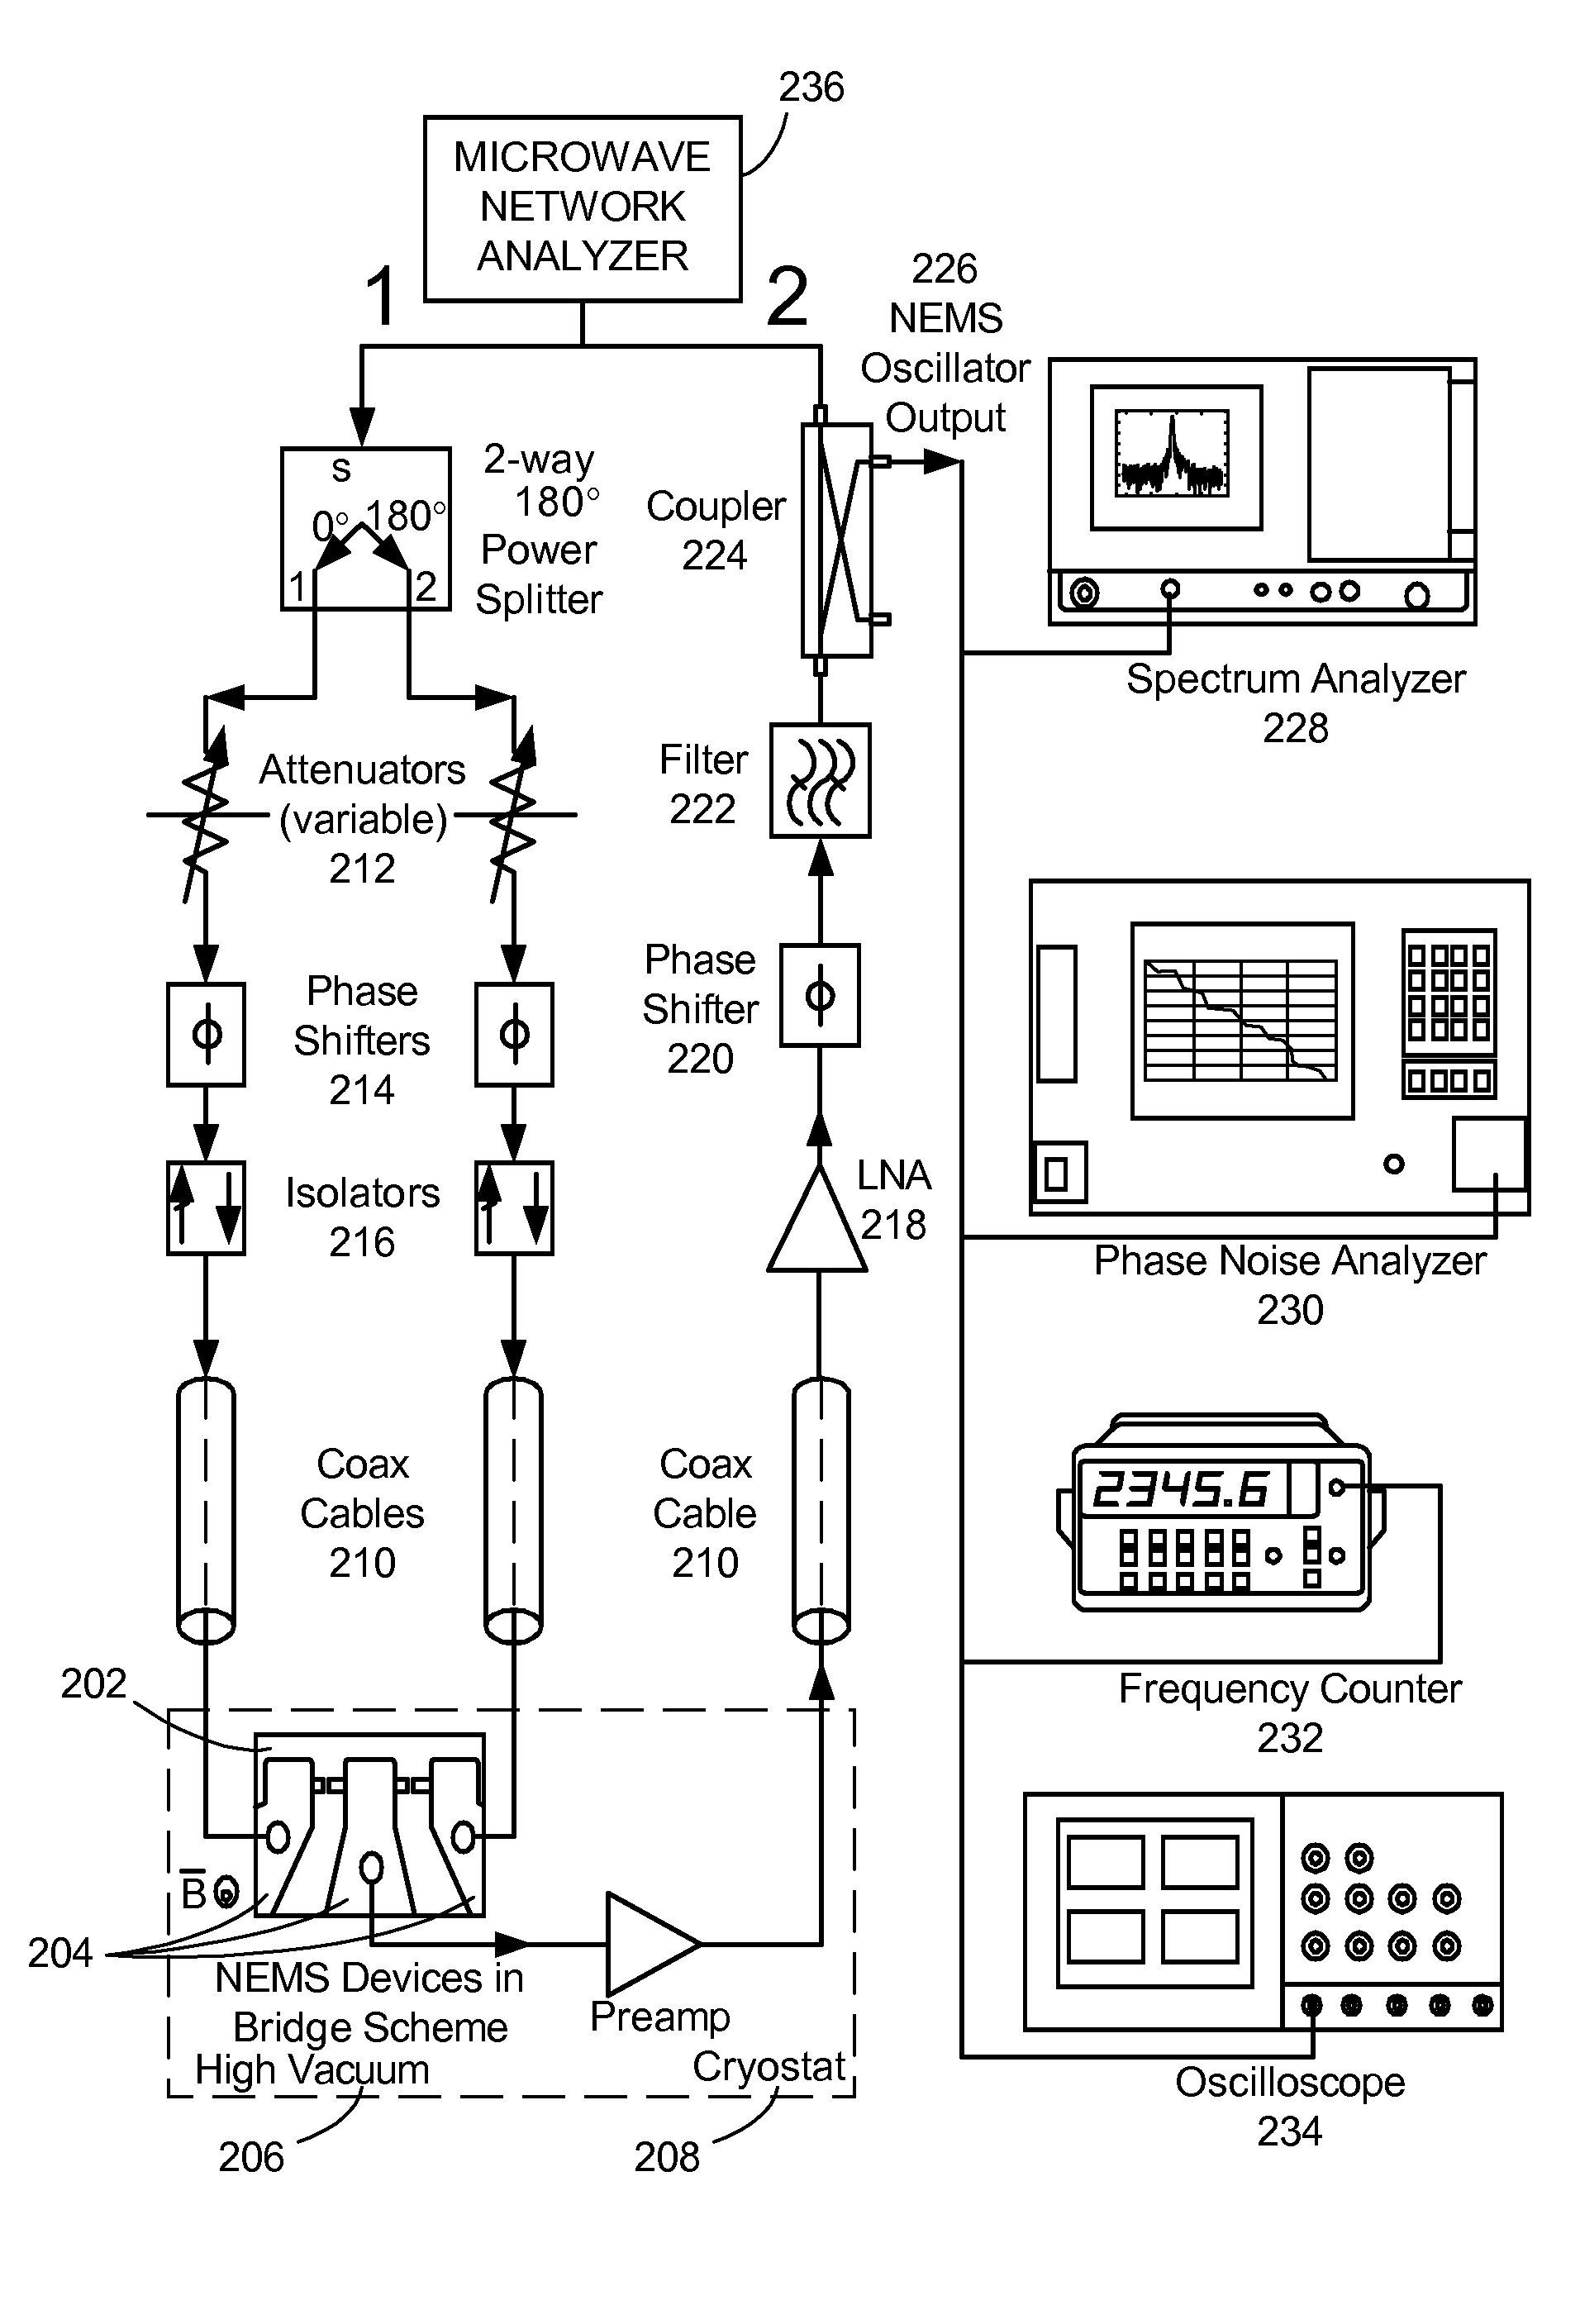 Ultra-high frequency self-sustaining oscillators, coupled oscillators, voltage-controlled oscillators, and oscillator arrays based on vibrating nanoelectromechanical resonators